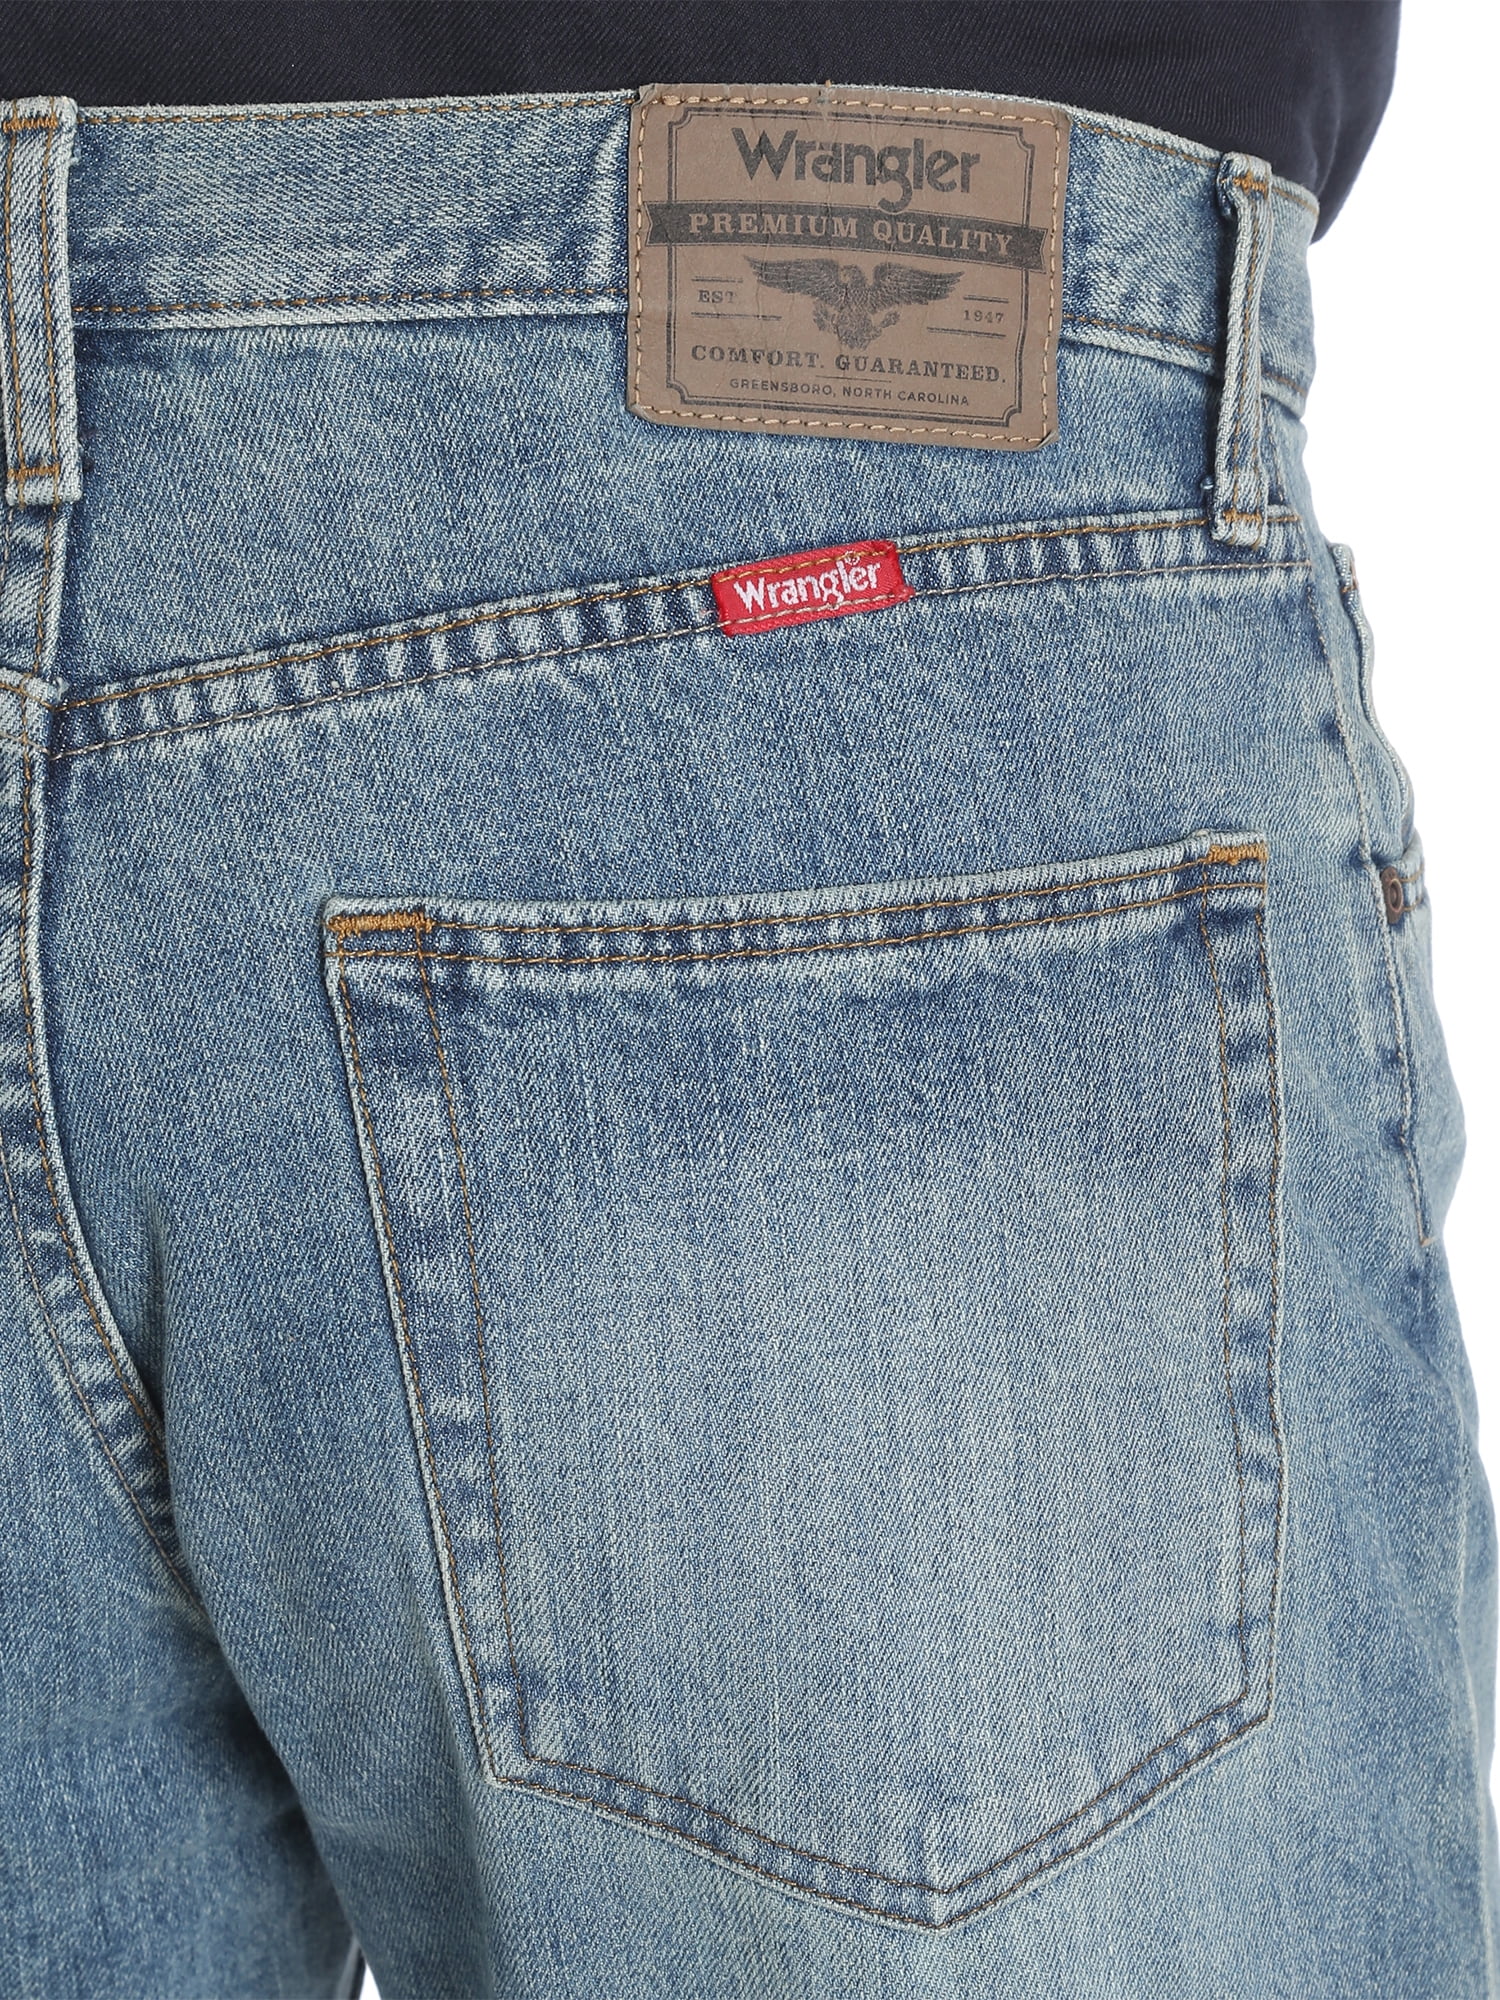 premium quality jeans